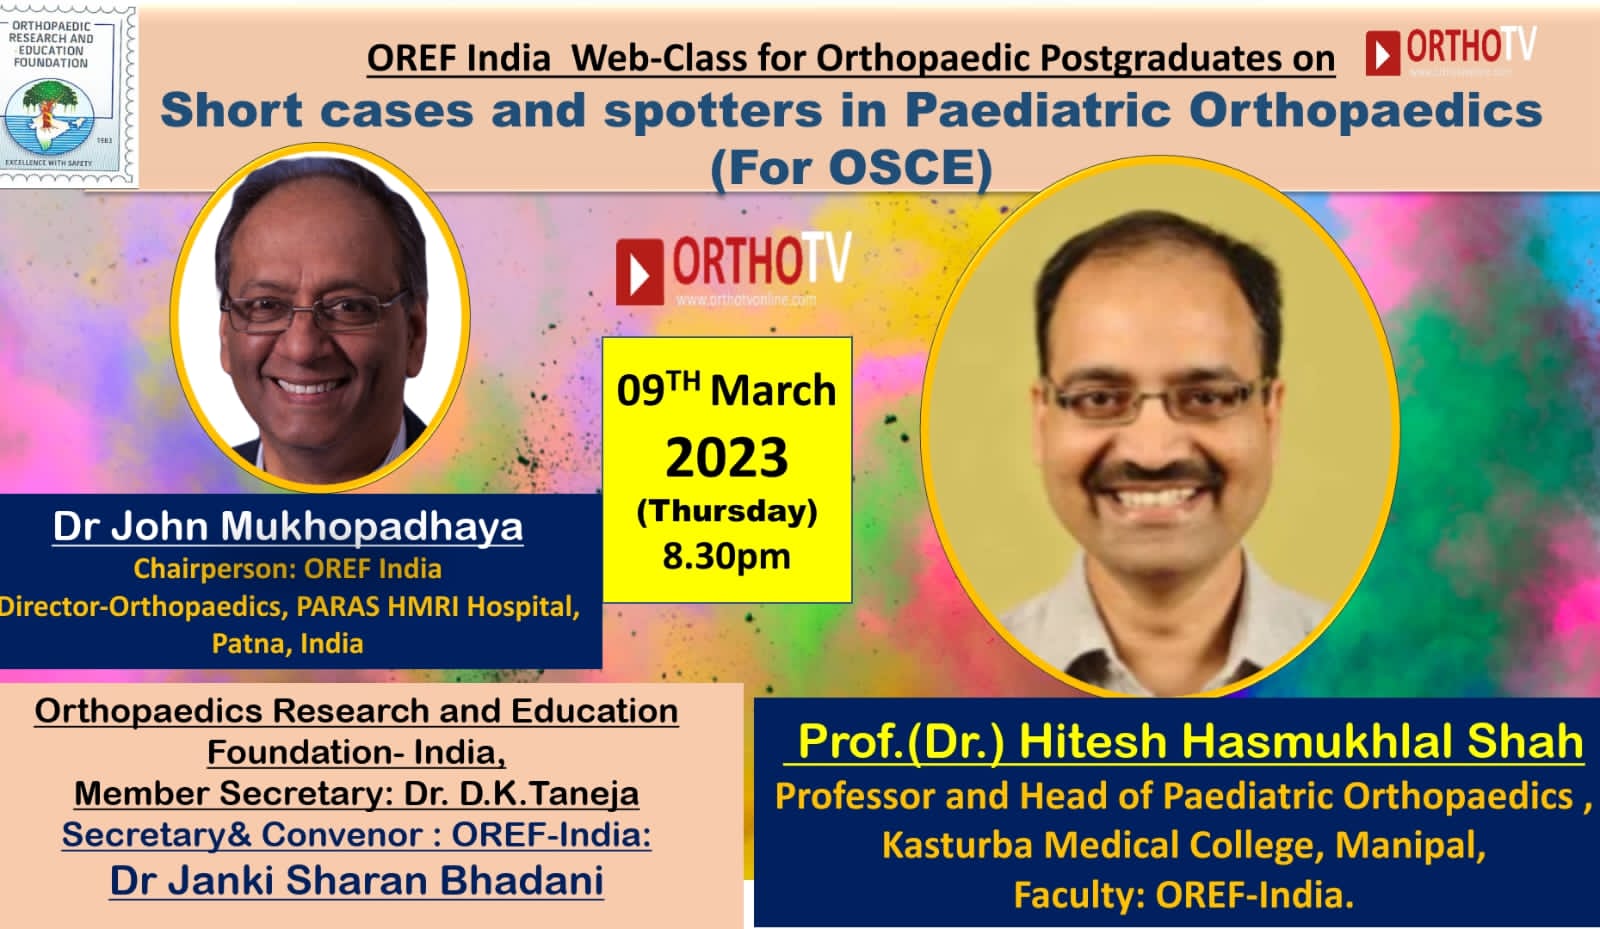 OREF Web-class for Orthopaedic Postgraduates on OrthoTV - Short cases and spotters in Paediatric Orthopaedics for OSCE